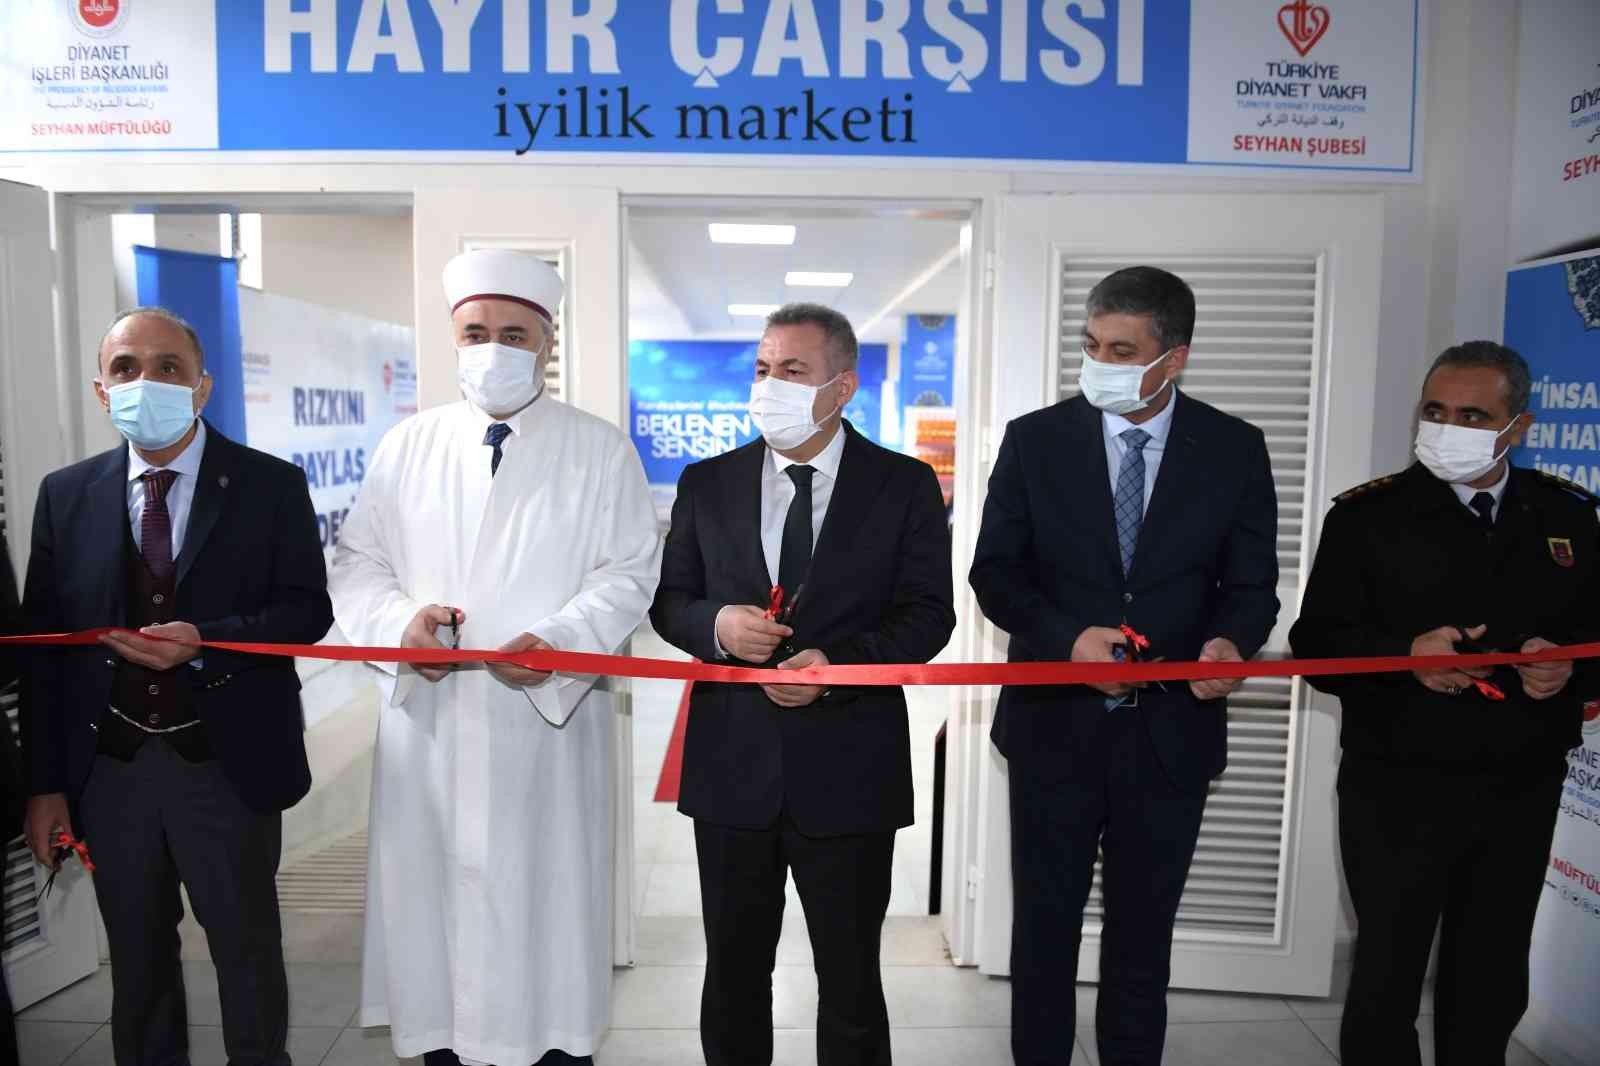 Adana’da Hayır Çarşısı açıldı #adana